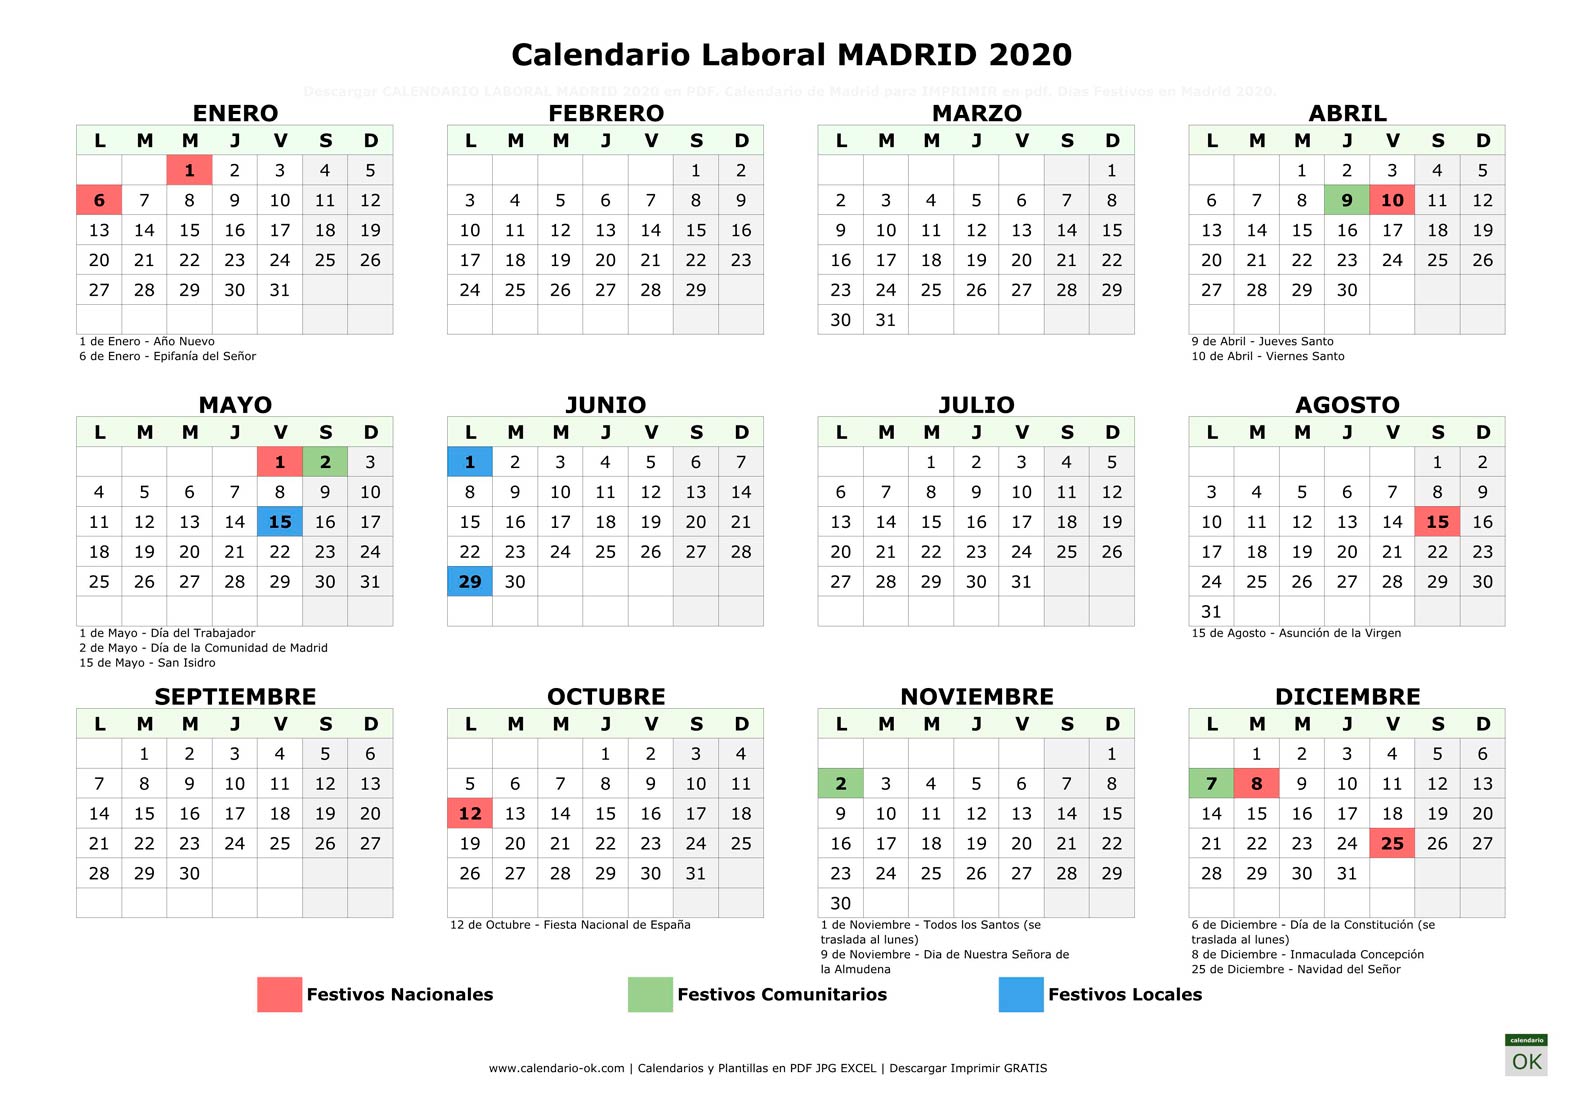 Calendario Laboral MADRID 2020 horizontal